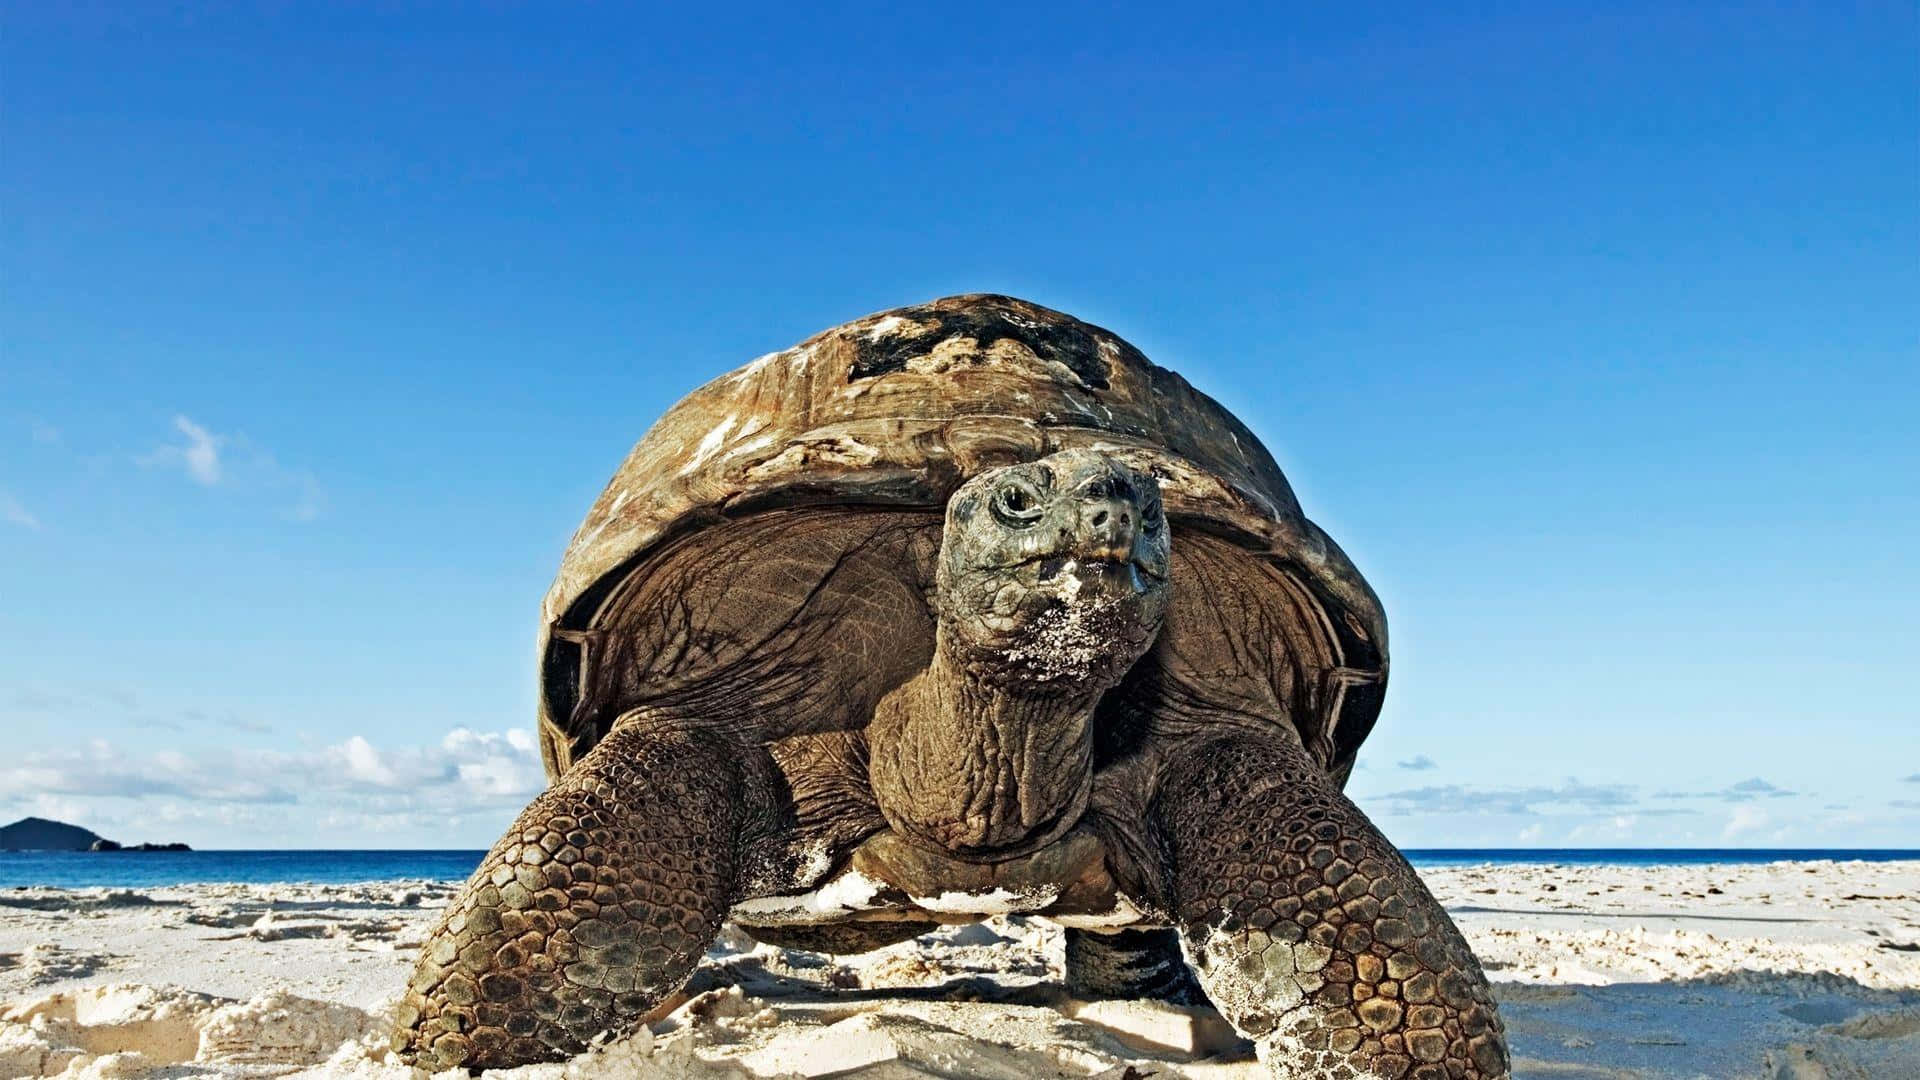 Majestic Tortoise in its Natural Habitat